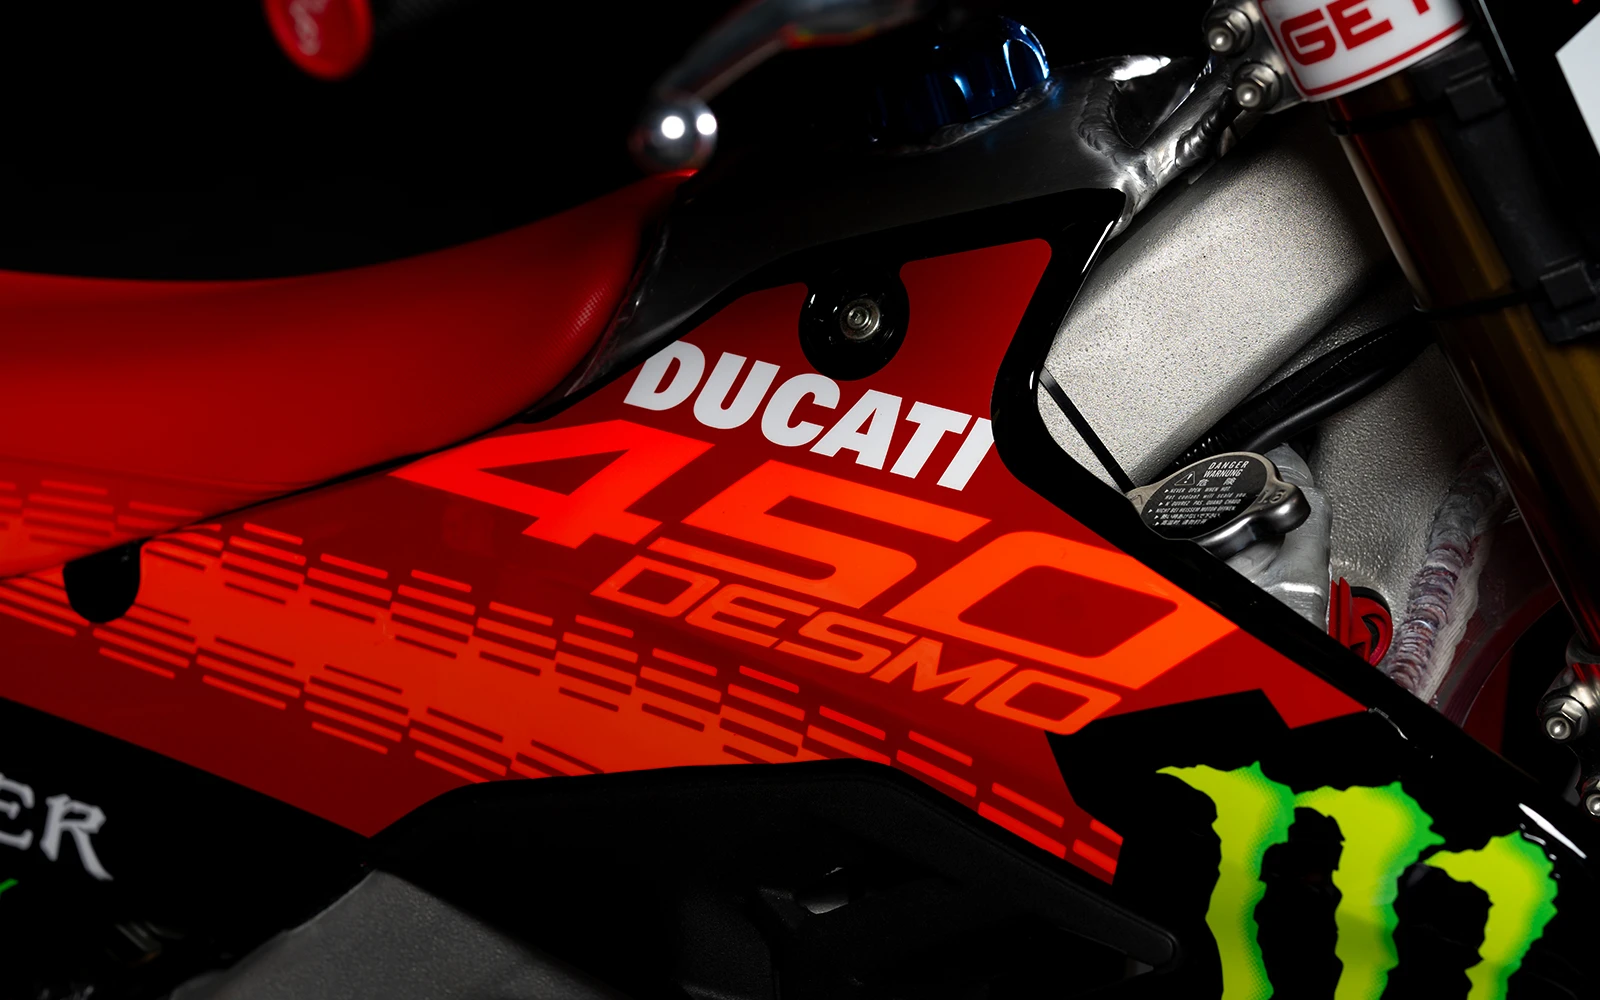 Ducati Desmo450 Motocross Bike Revealed - Racer X